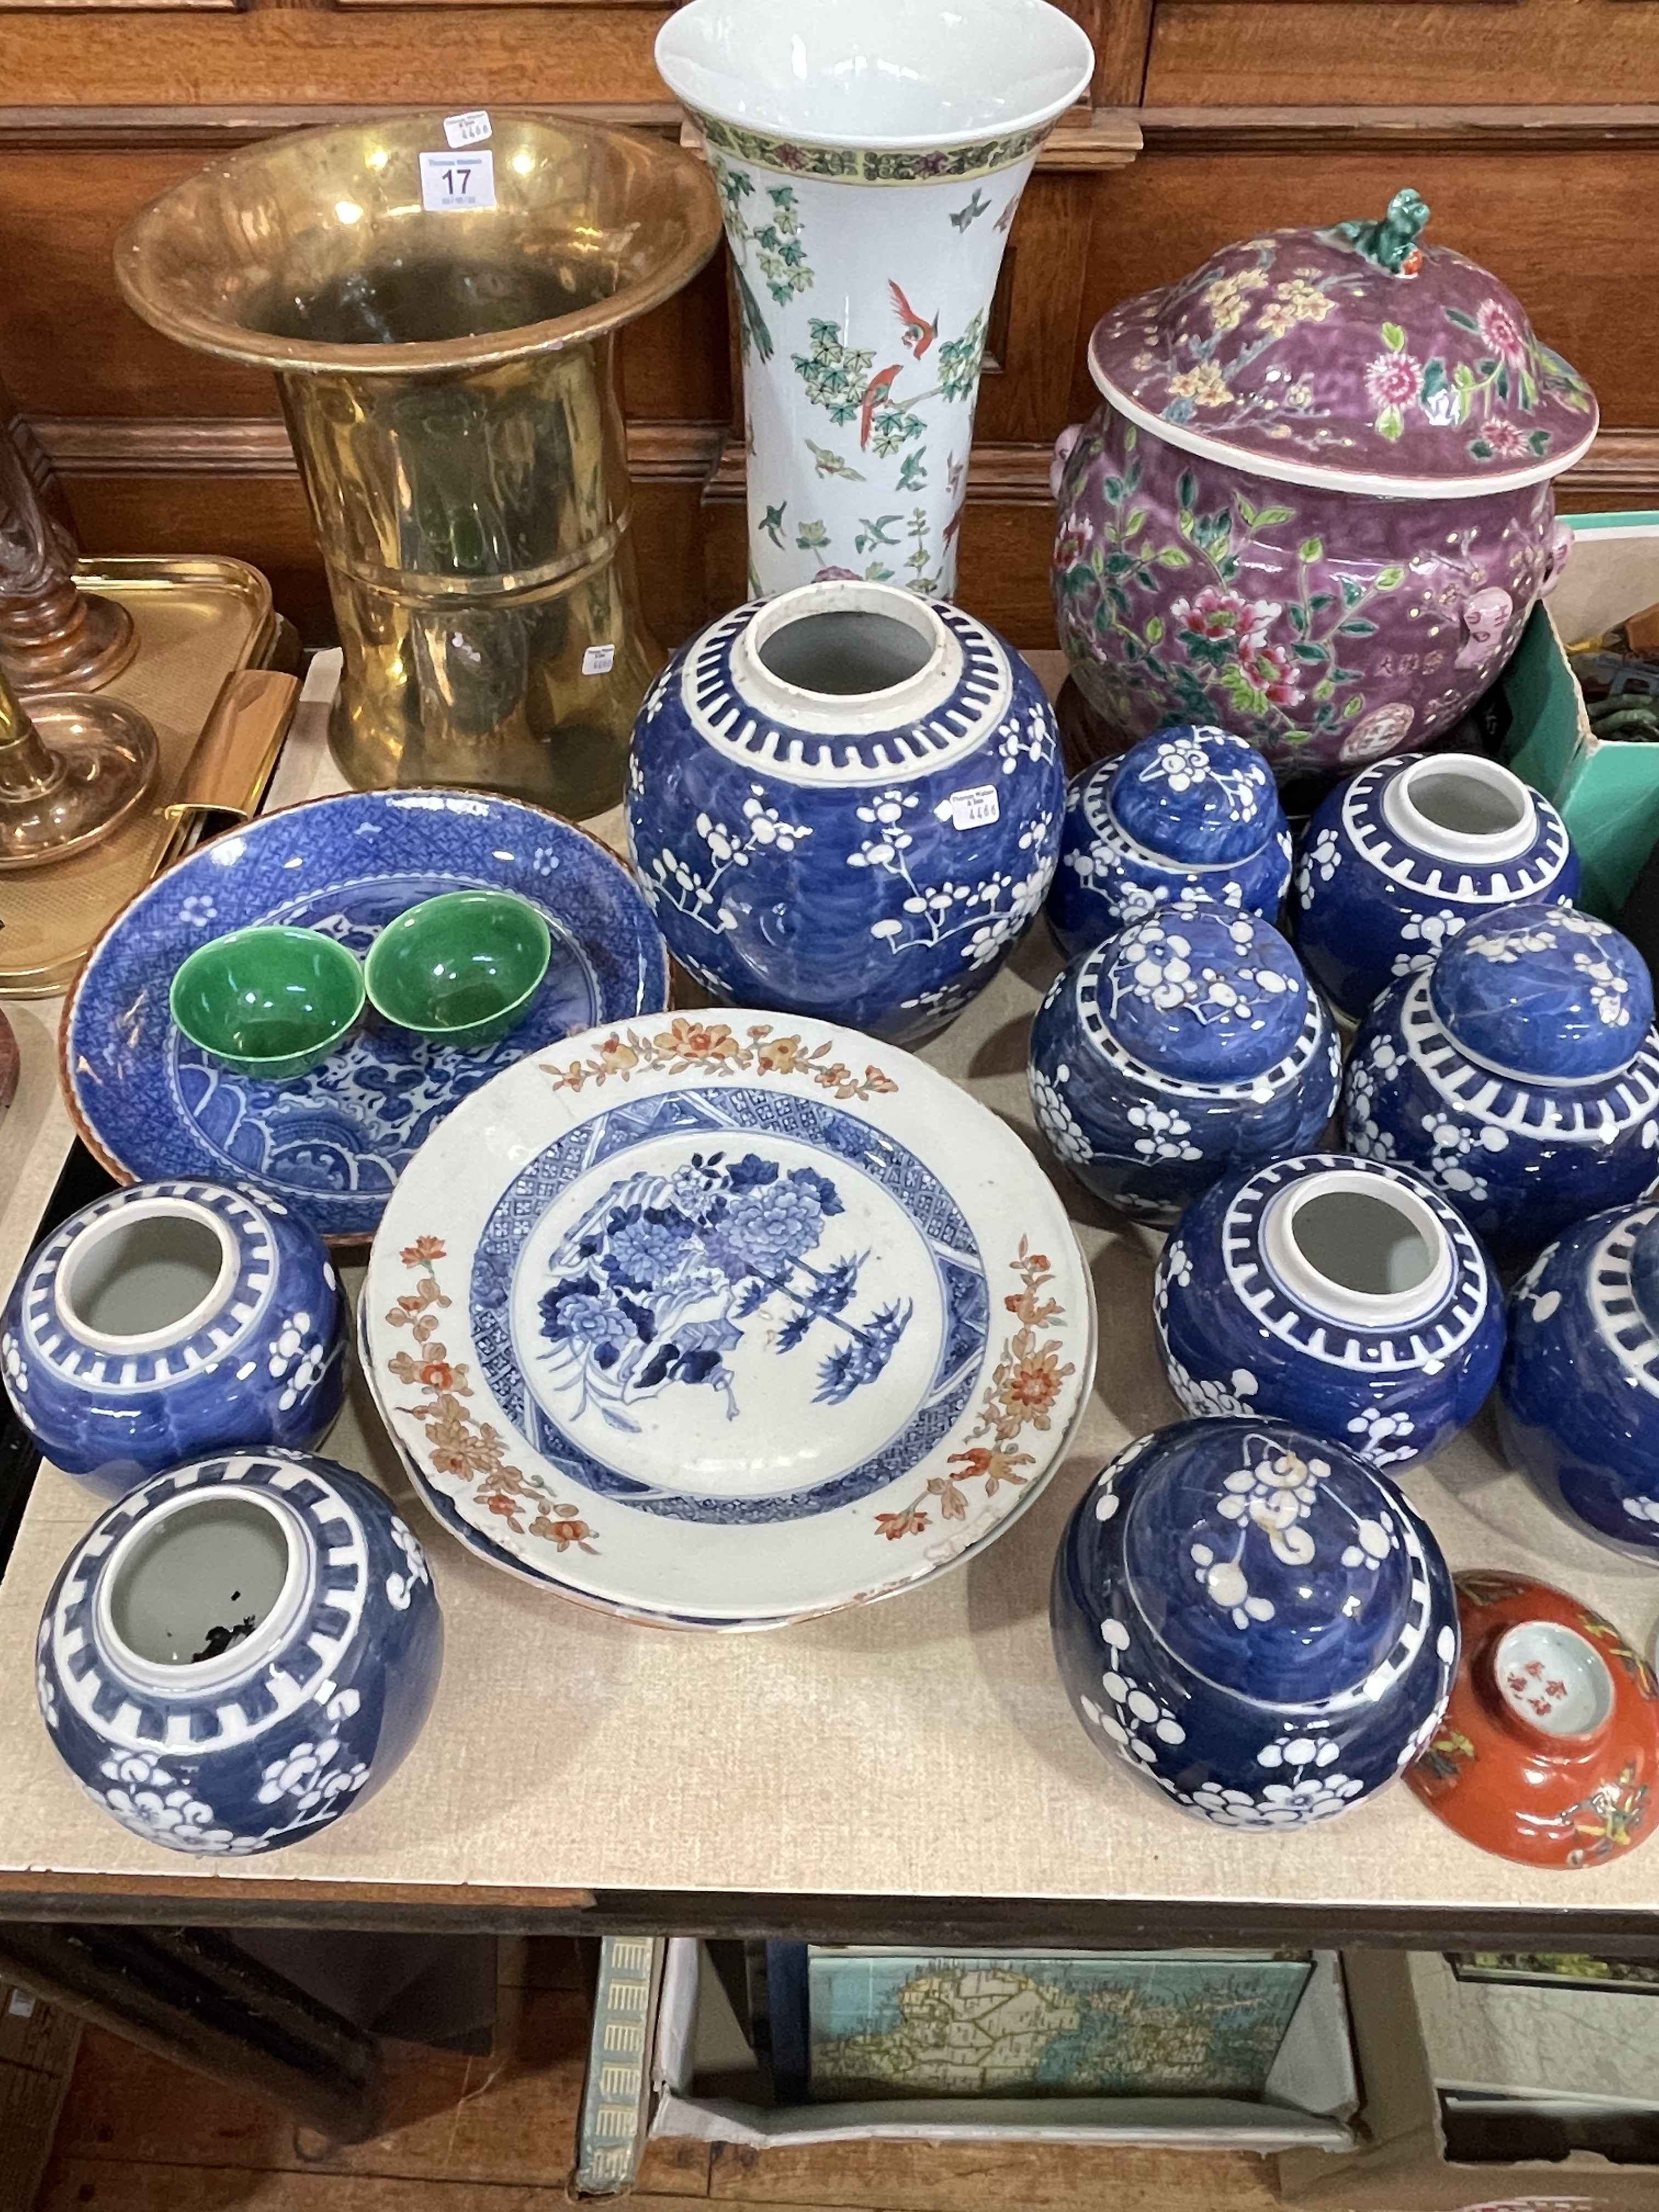 Chinese vases, prunus ginger jars, plates, brass vase, etc.